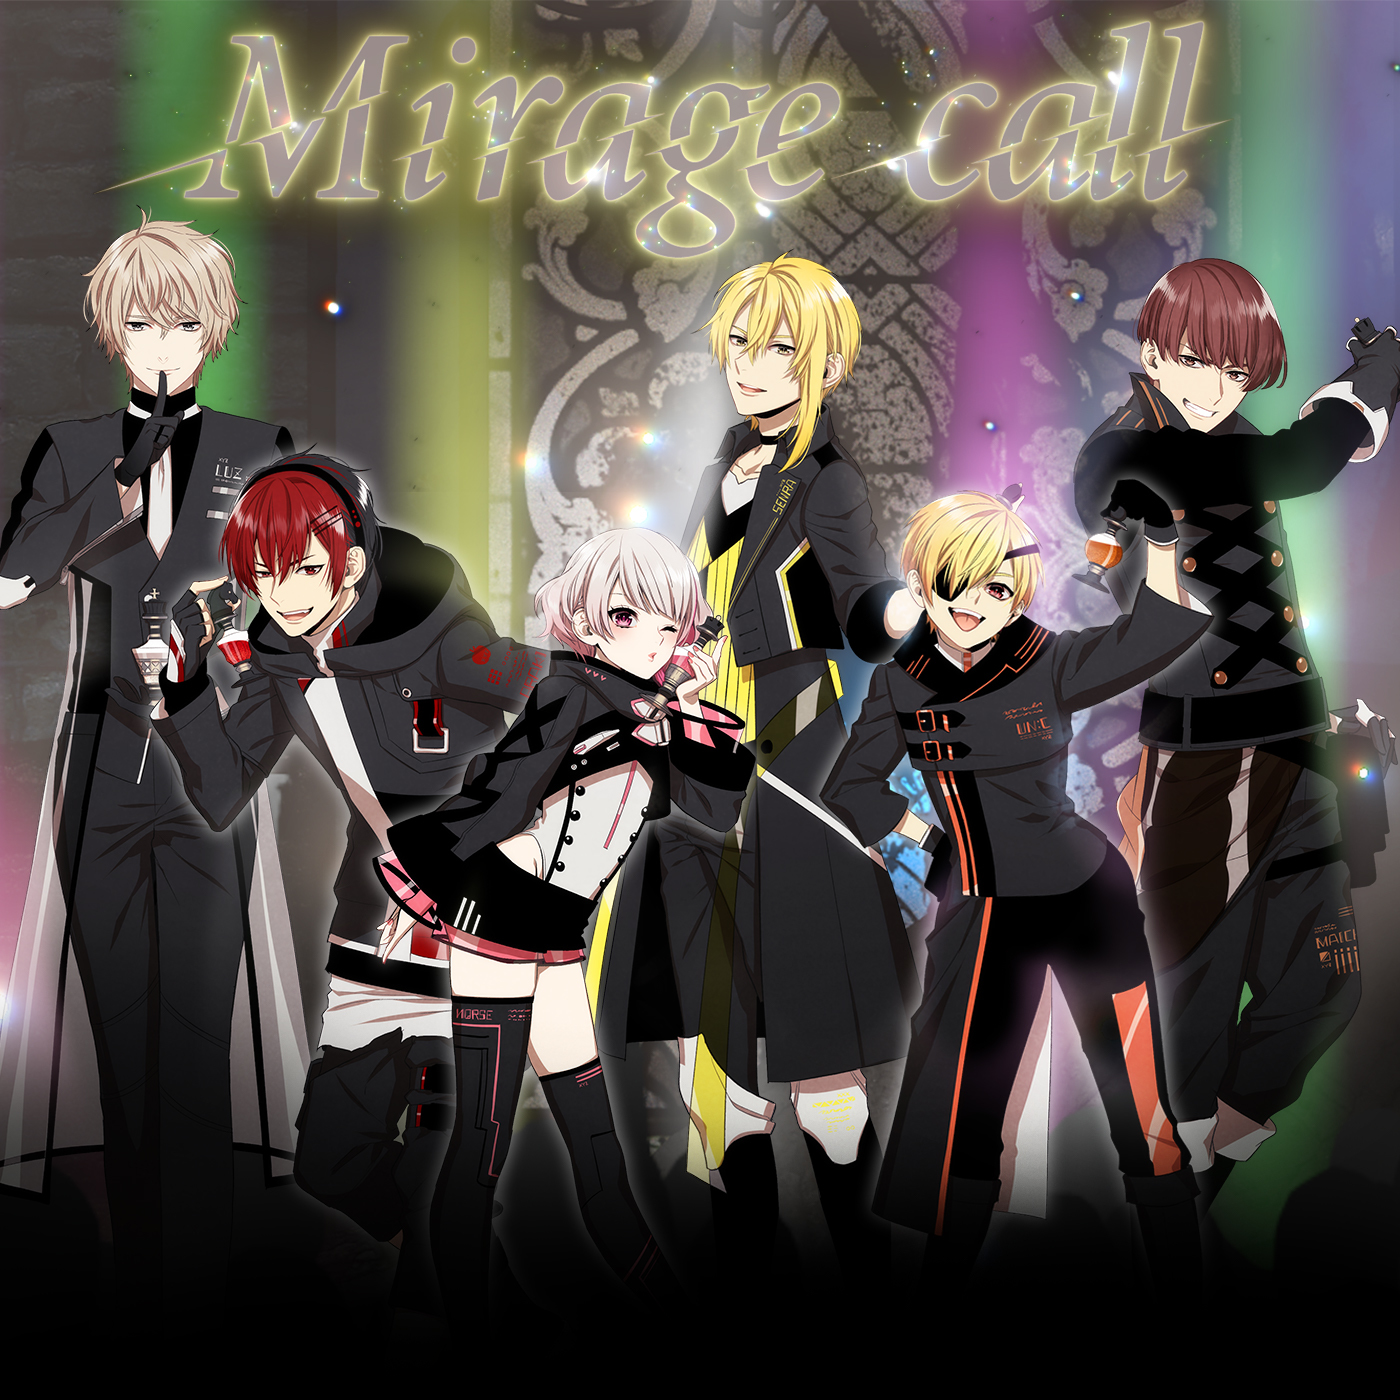 「Mirage call」